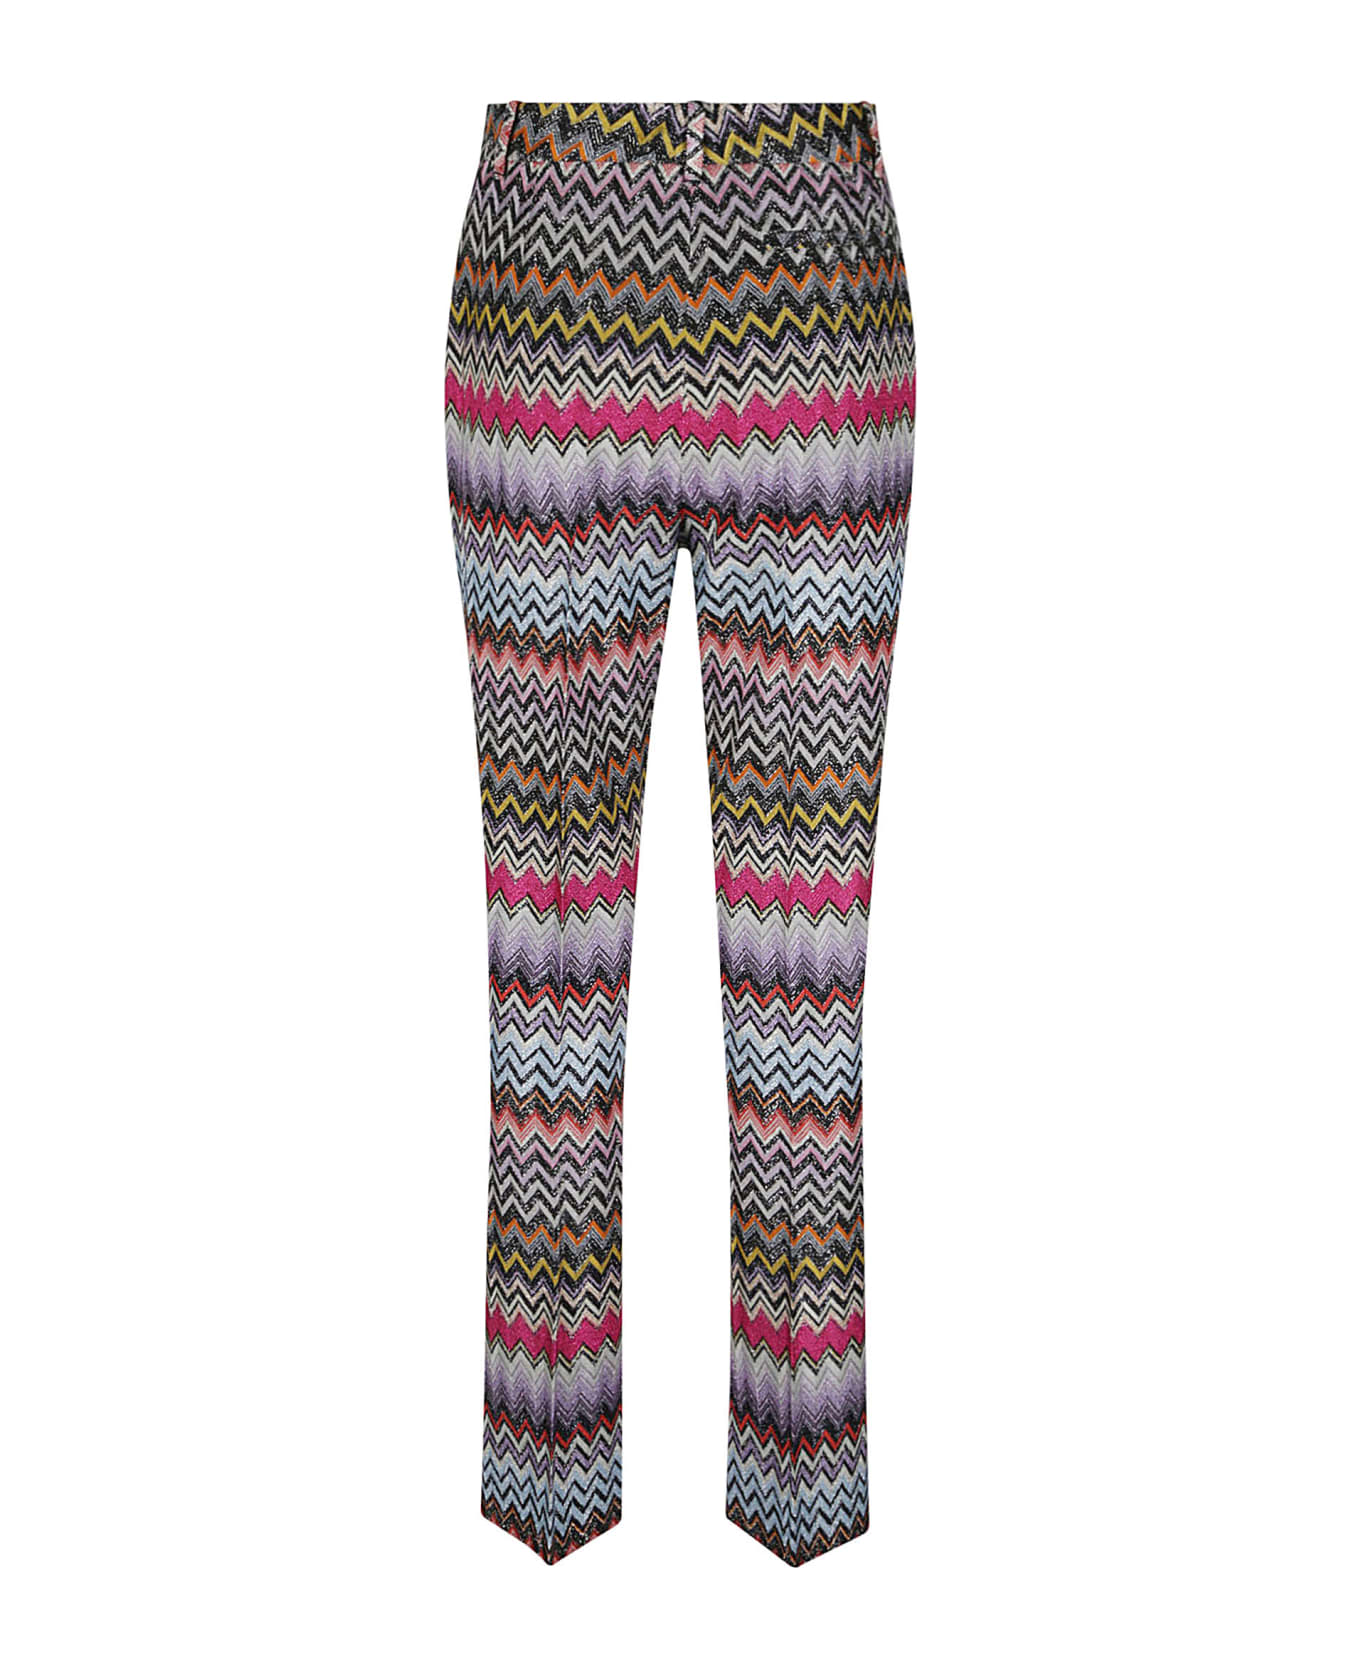 Missoni Zigzag Print Trousers - Multicolor